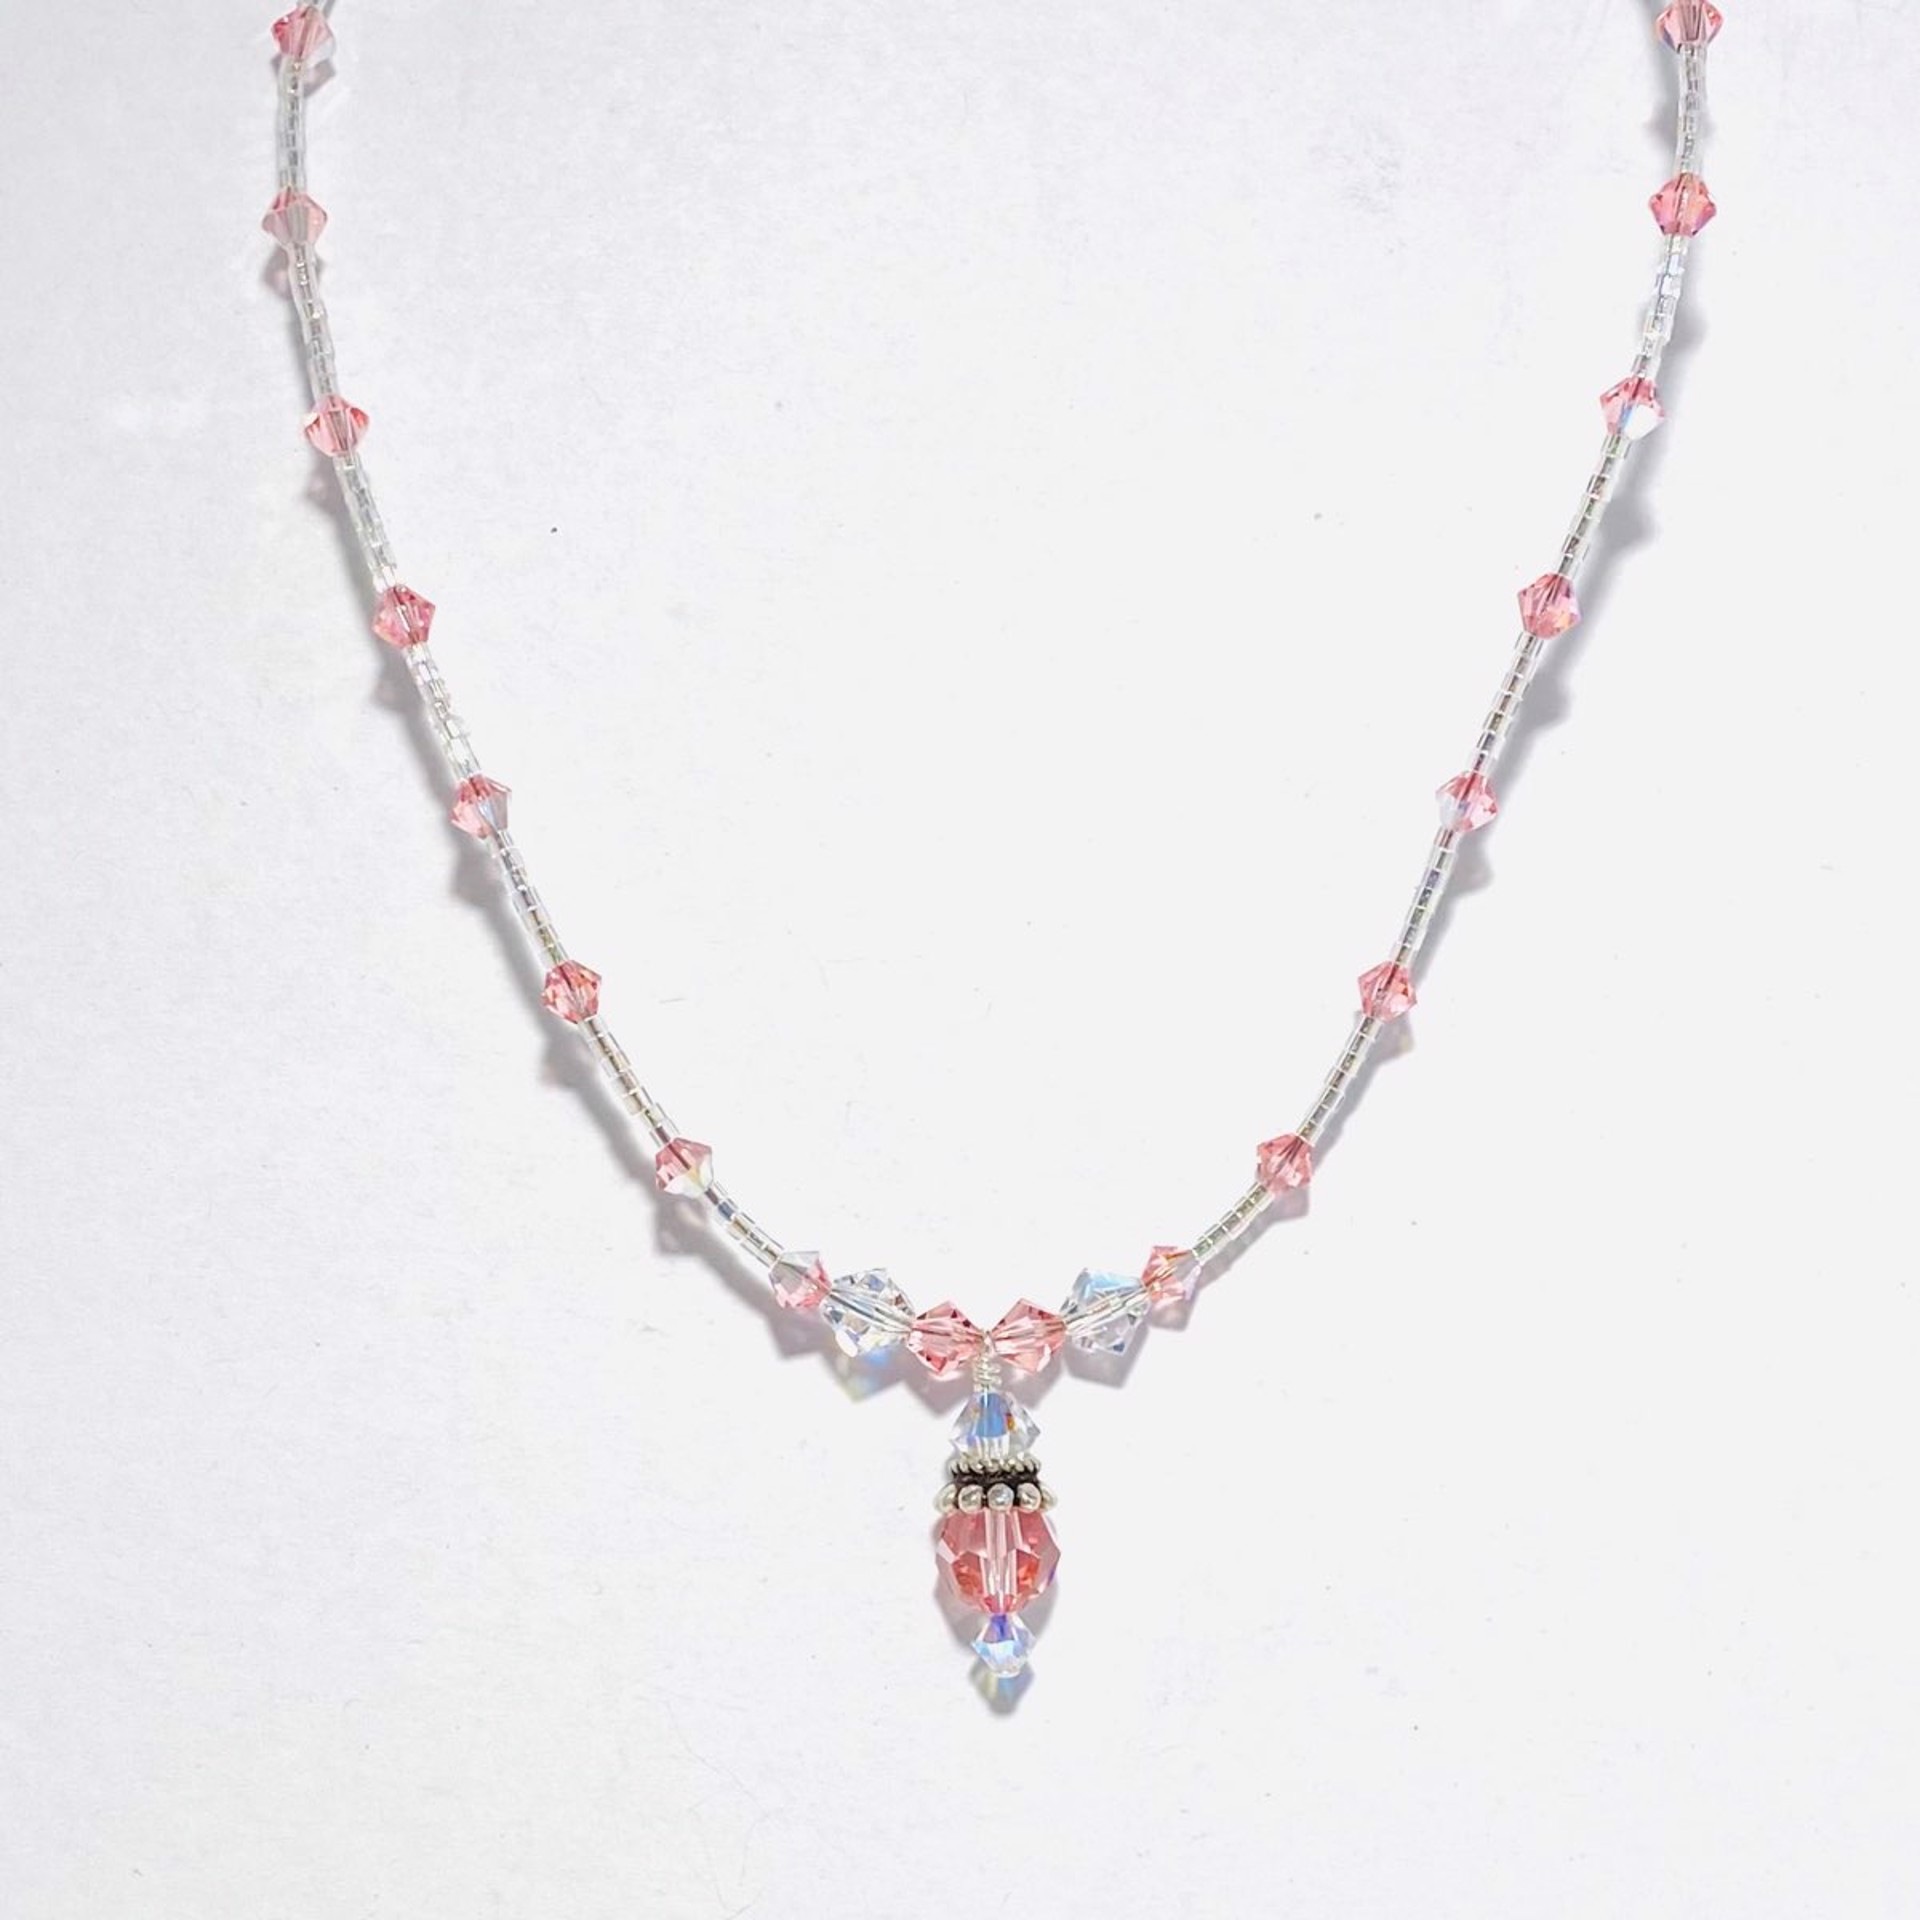 SHOSH22-55 Birthstone Necklace~October Pink "Opal" Swarovski Crystals by Shoshannah Weinisch